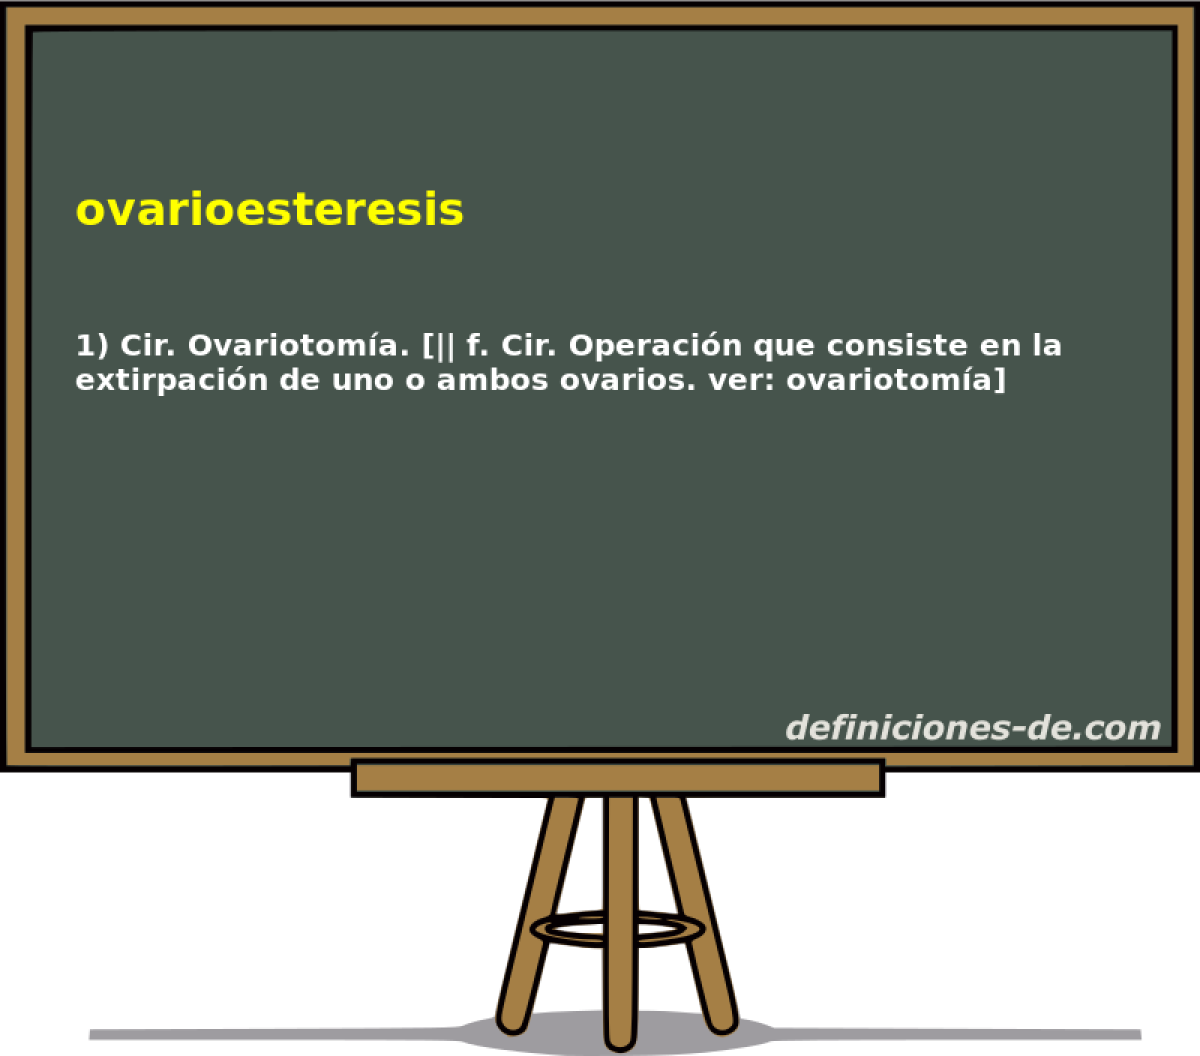 ovarioesteresis 